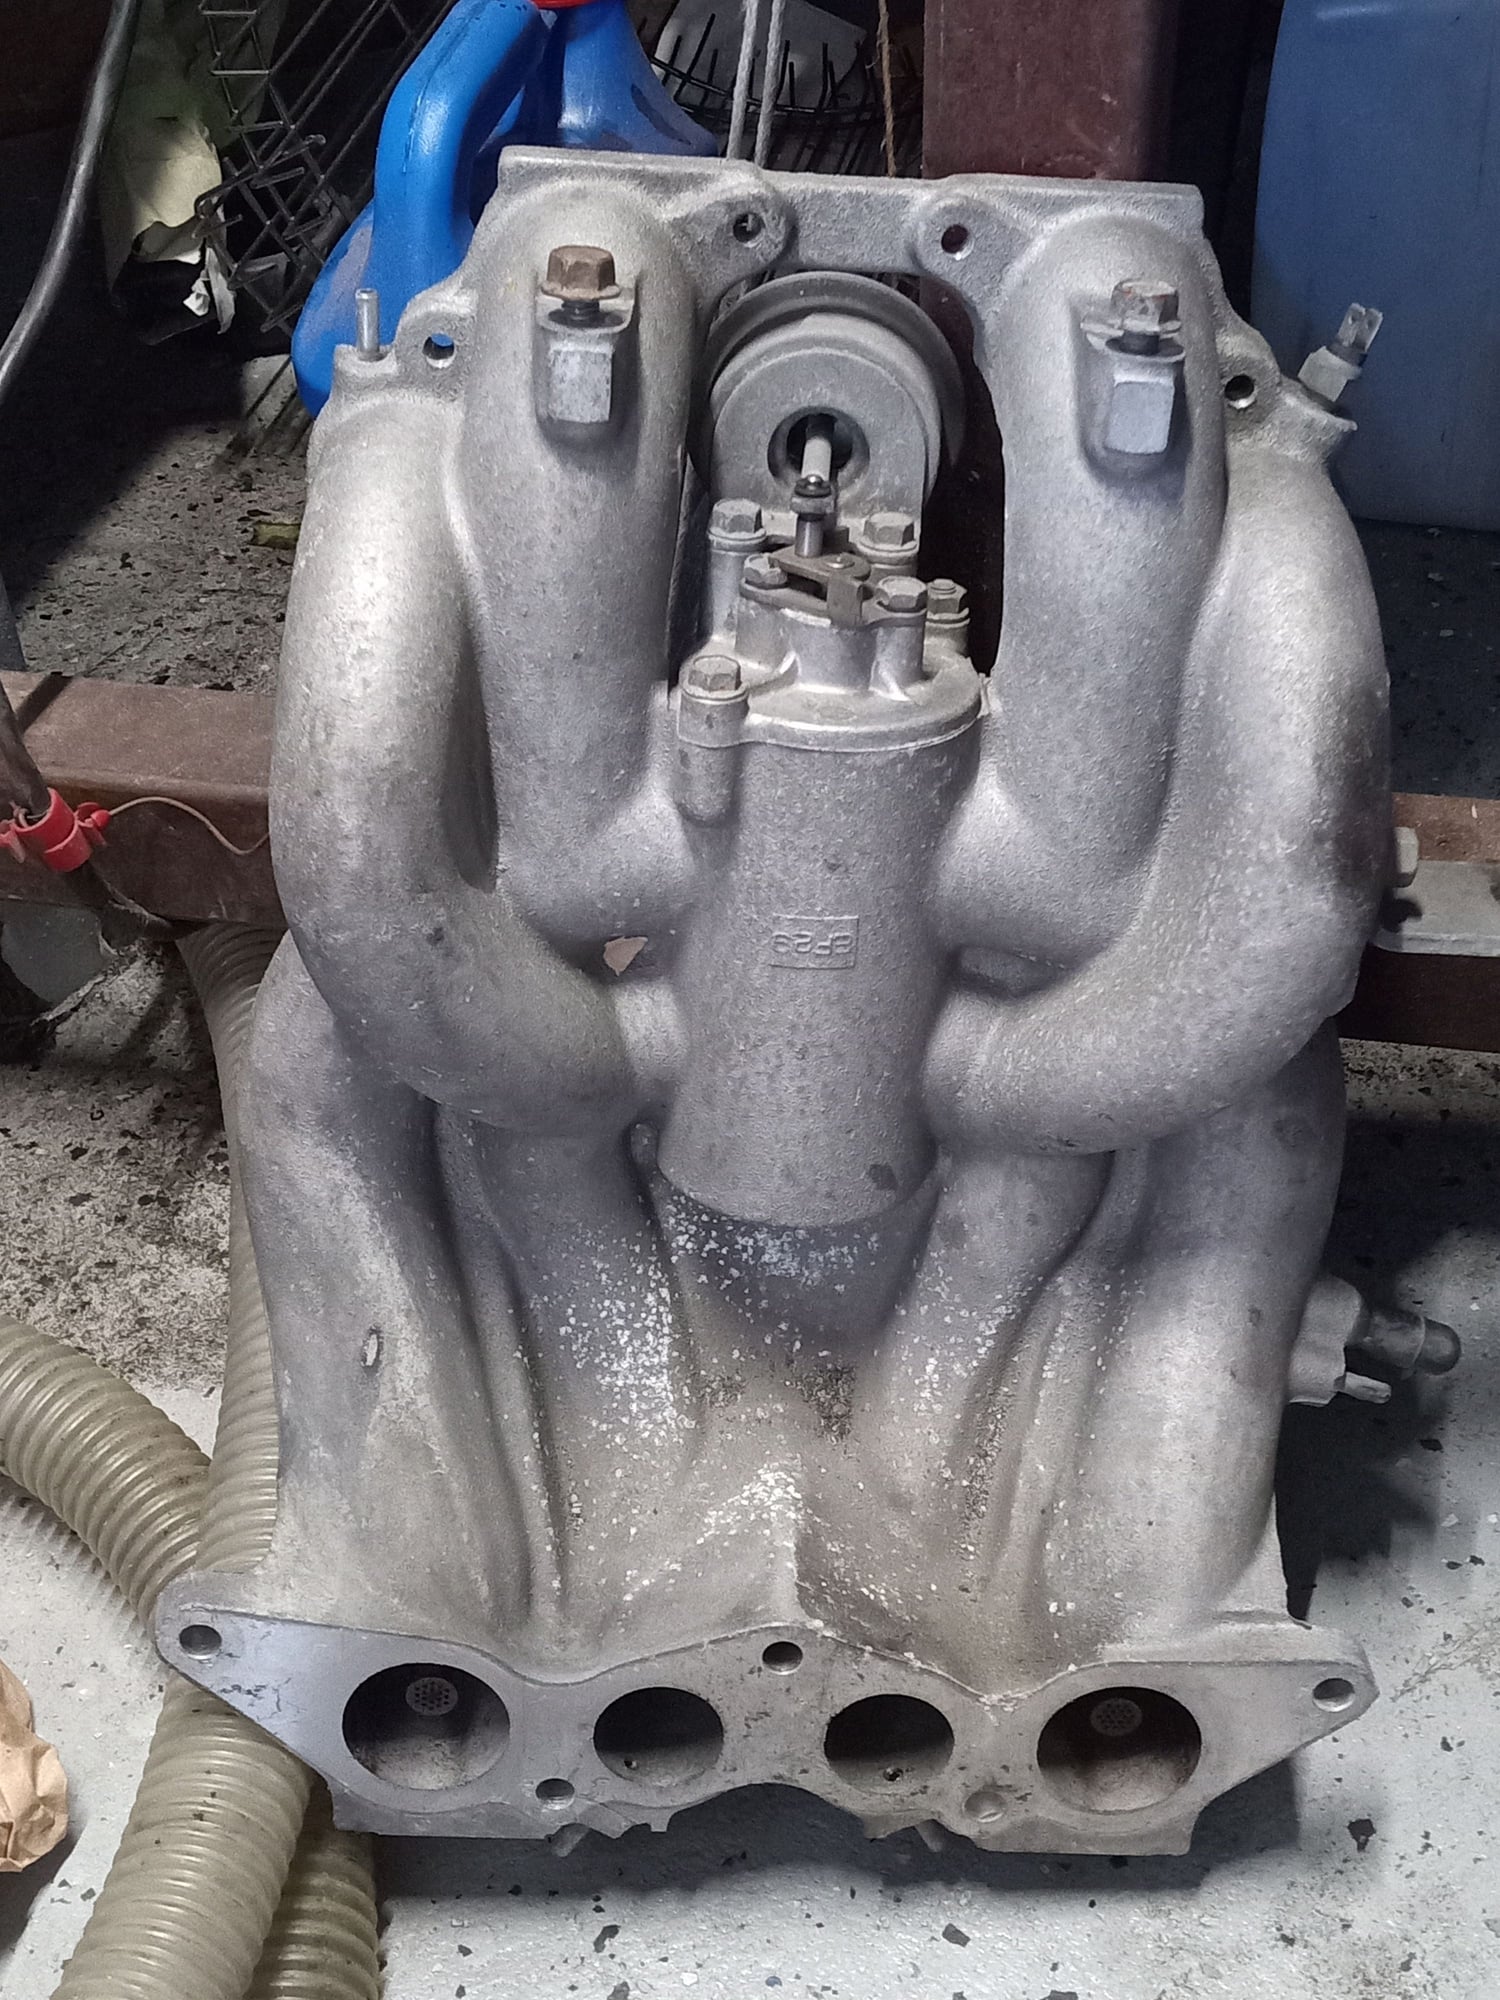 Engine - Intake/Fuel - Second gen intake manifold - Used - Lancaster, PA 17022, United States